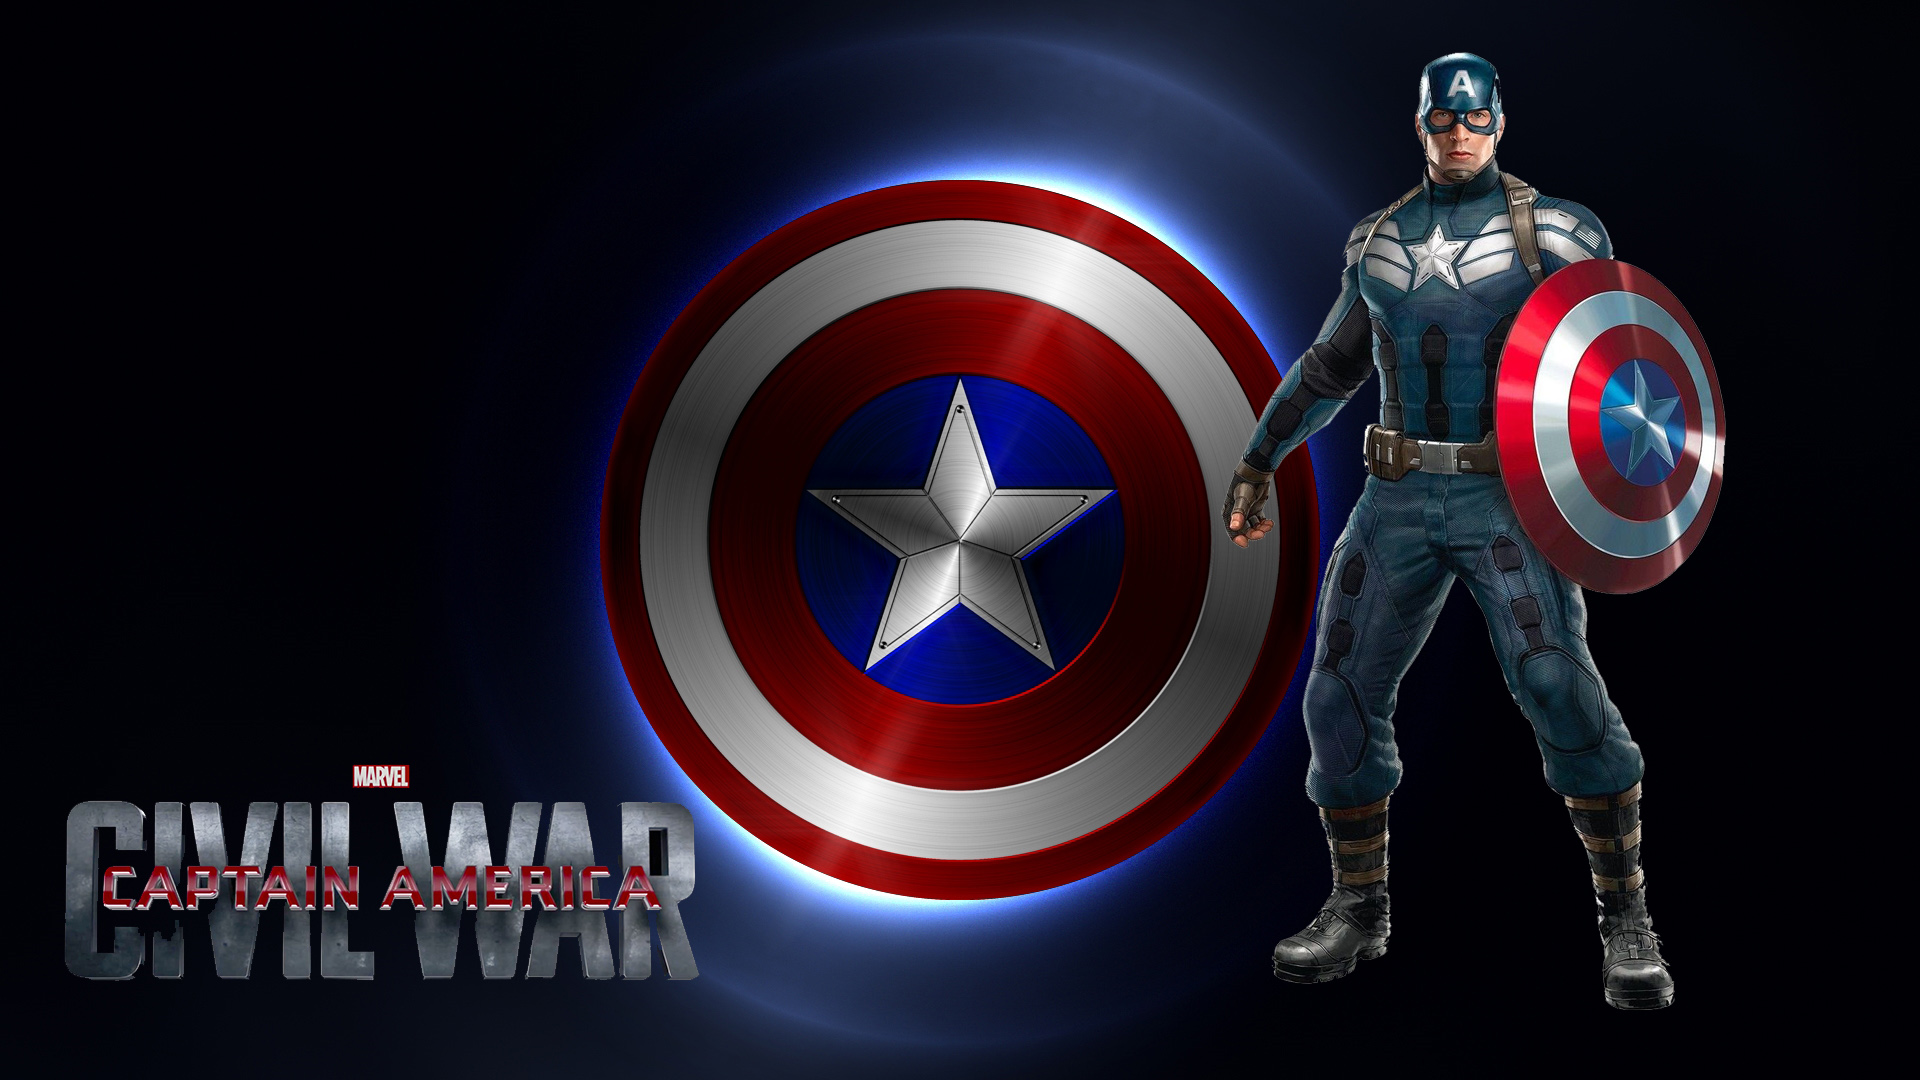 Captain America Movie Download Free